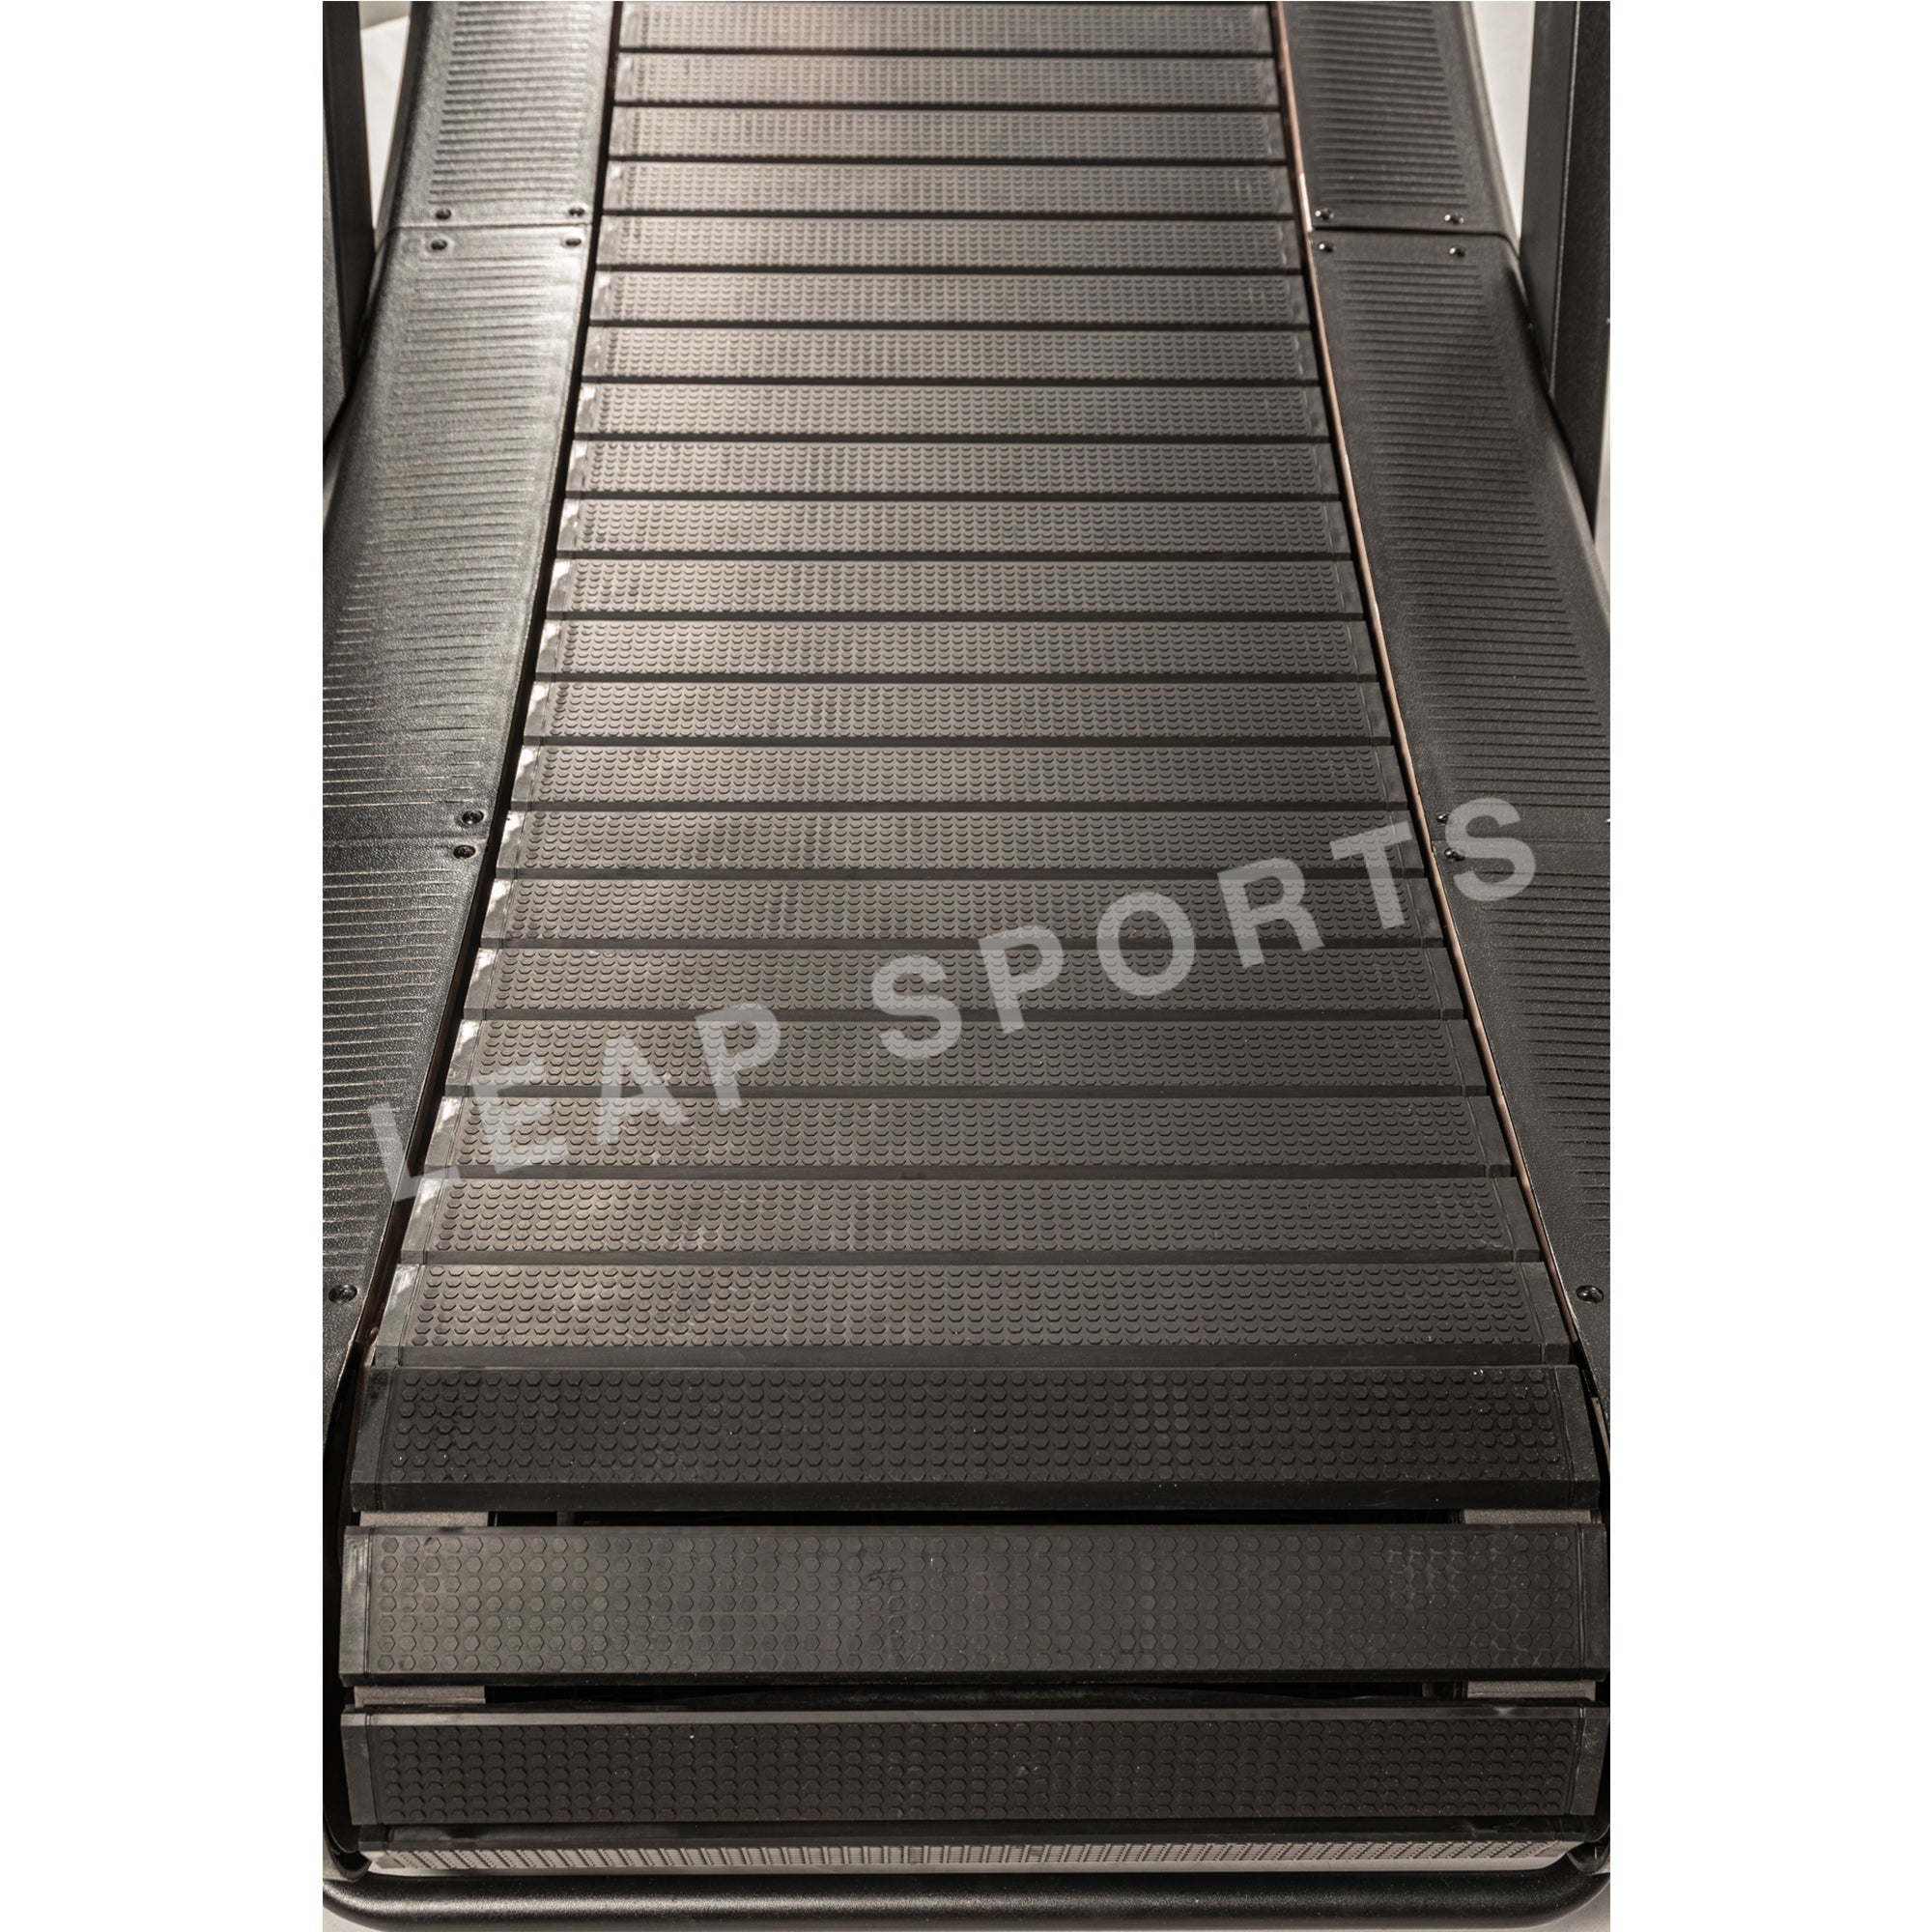 Leap Sports Curved Manual Treadmill